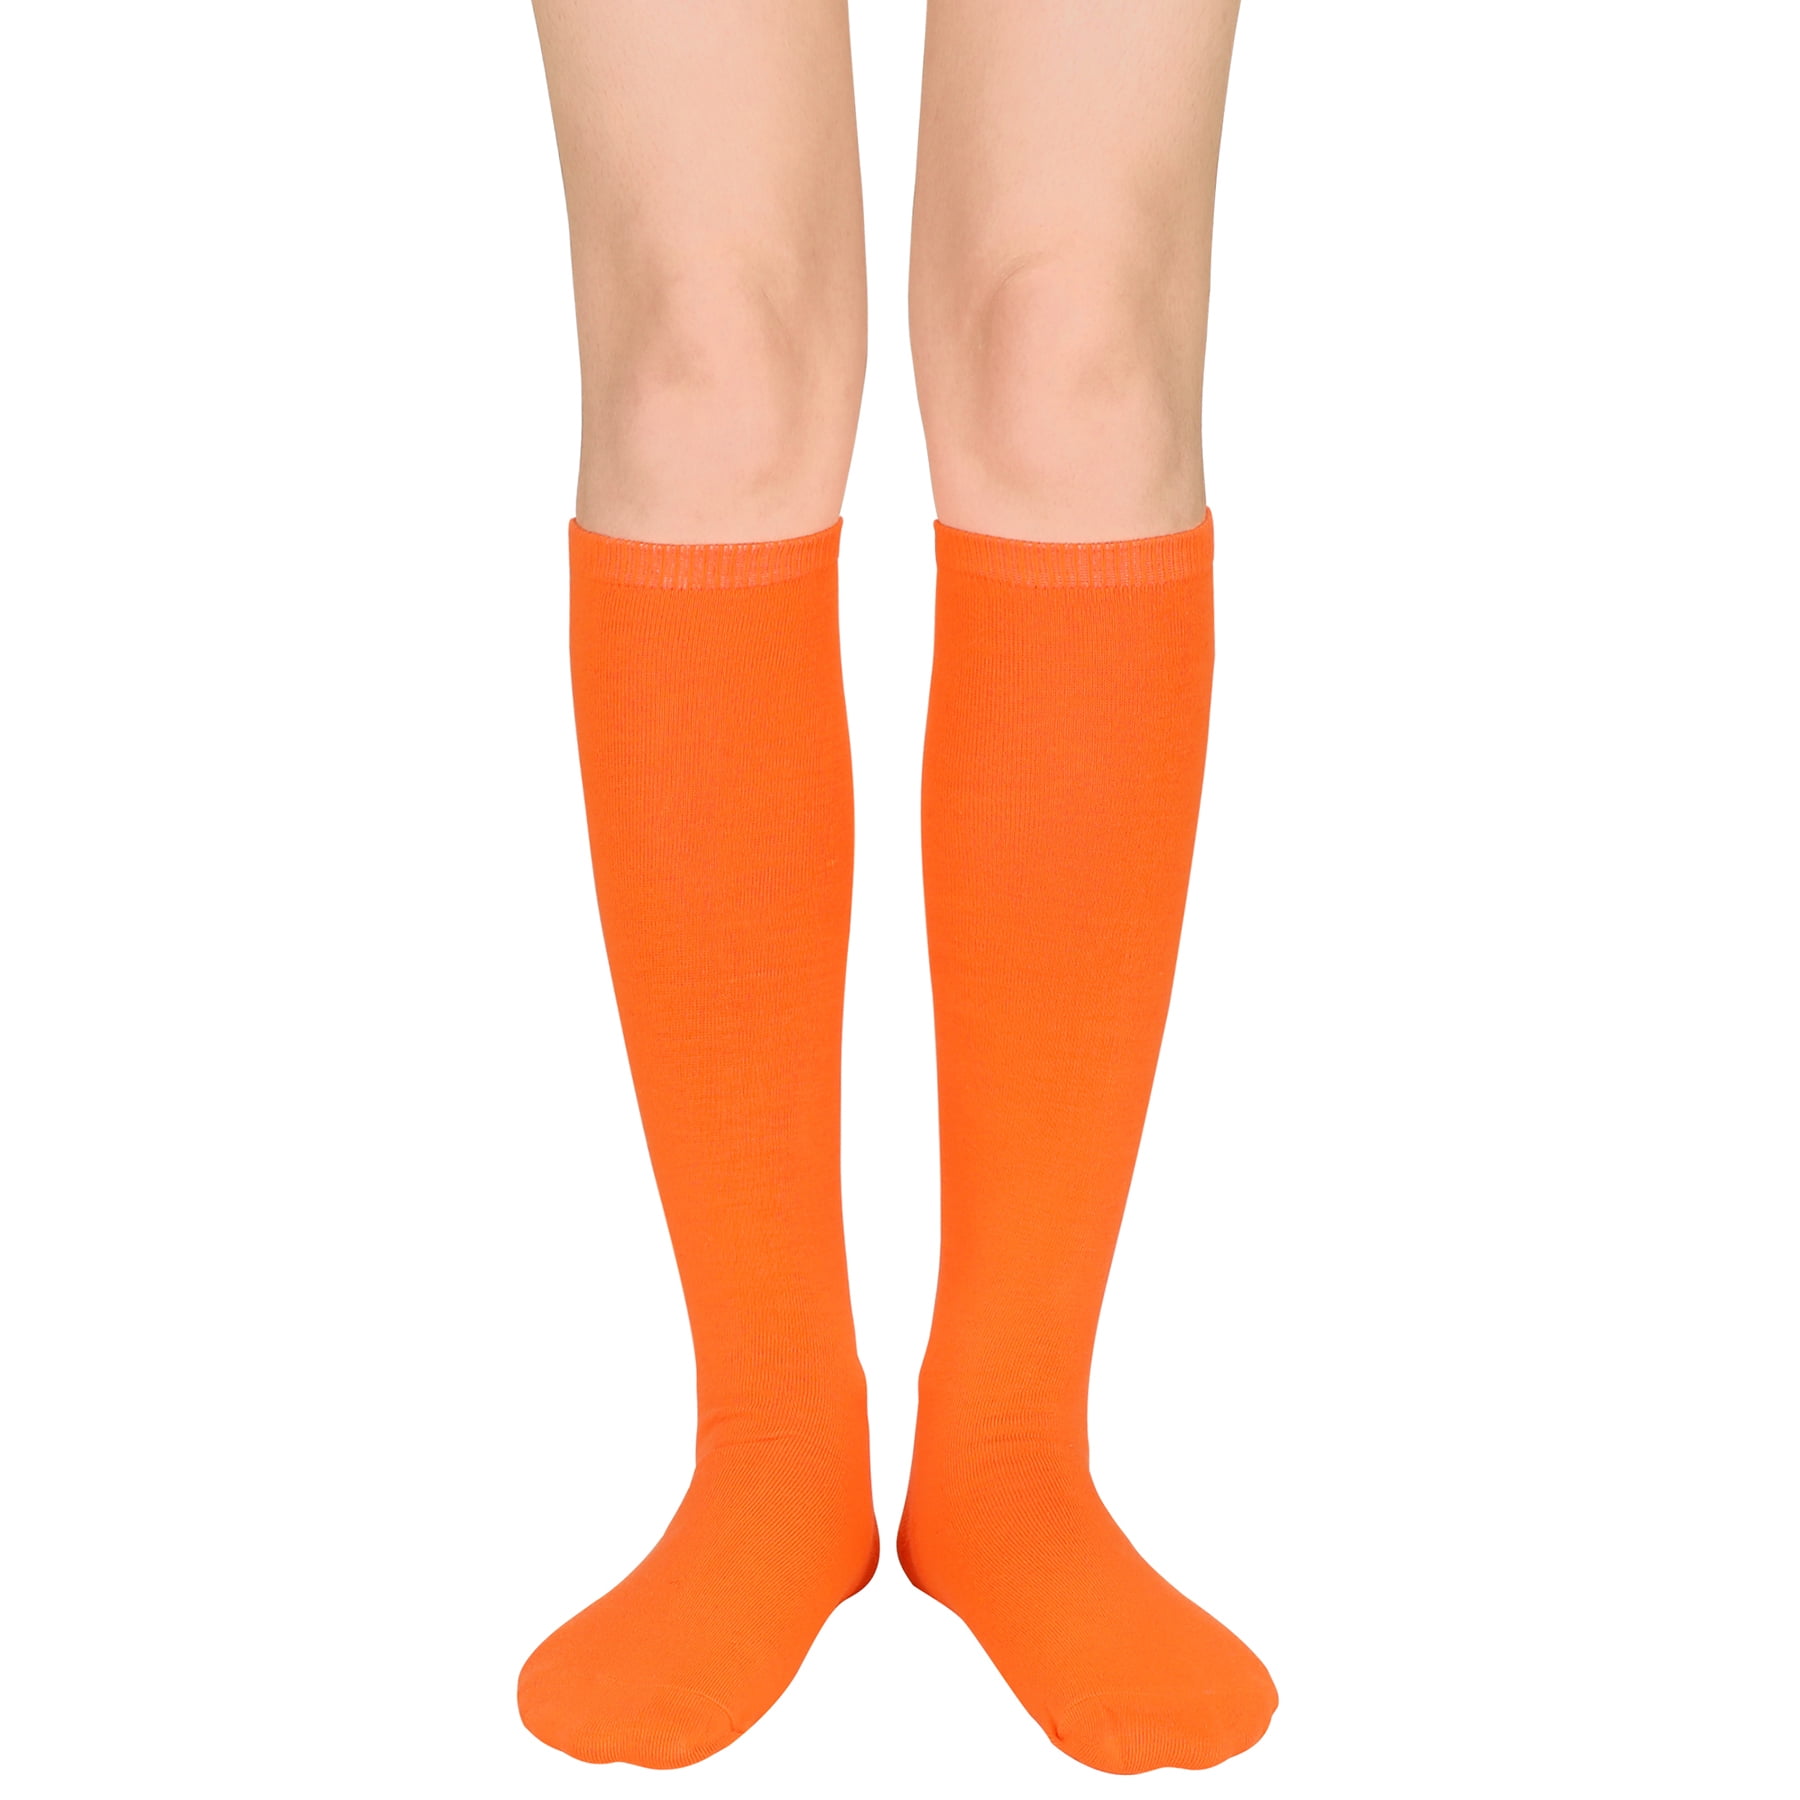 Zando Orange Knee High Socks for Women Solid Color Knee Soccer Socks ...